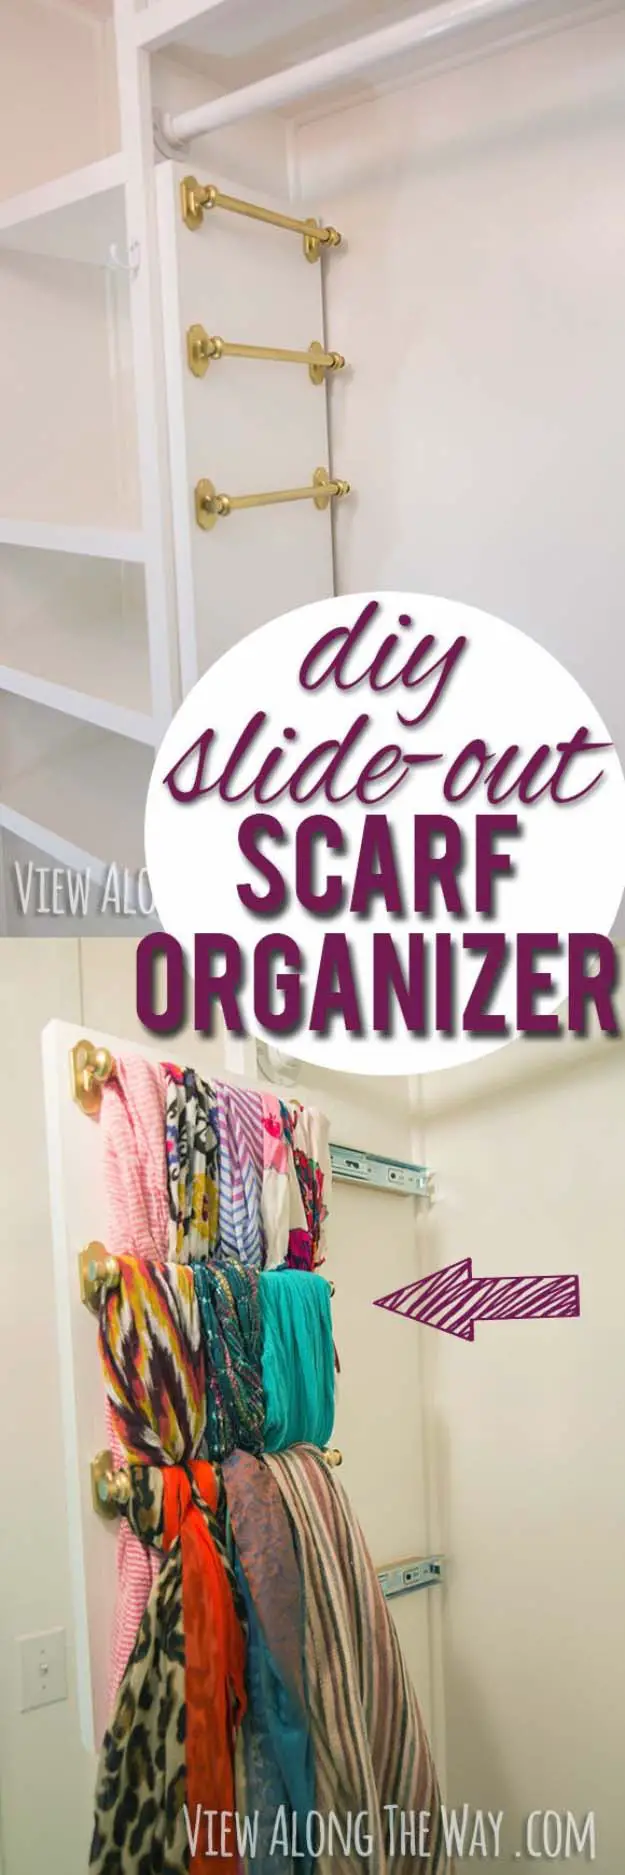 Closet Organization, DIY Slide-out Scarf and Belt Organizers